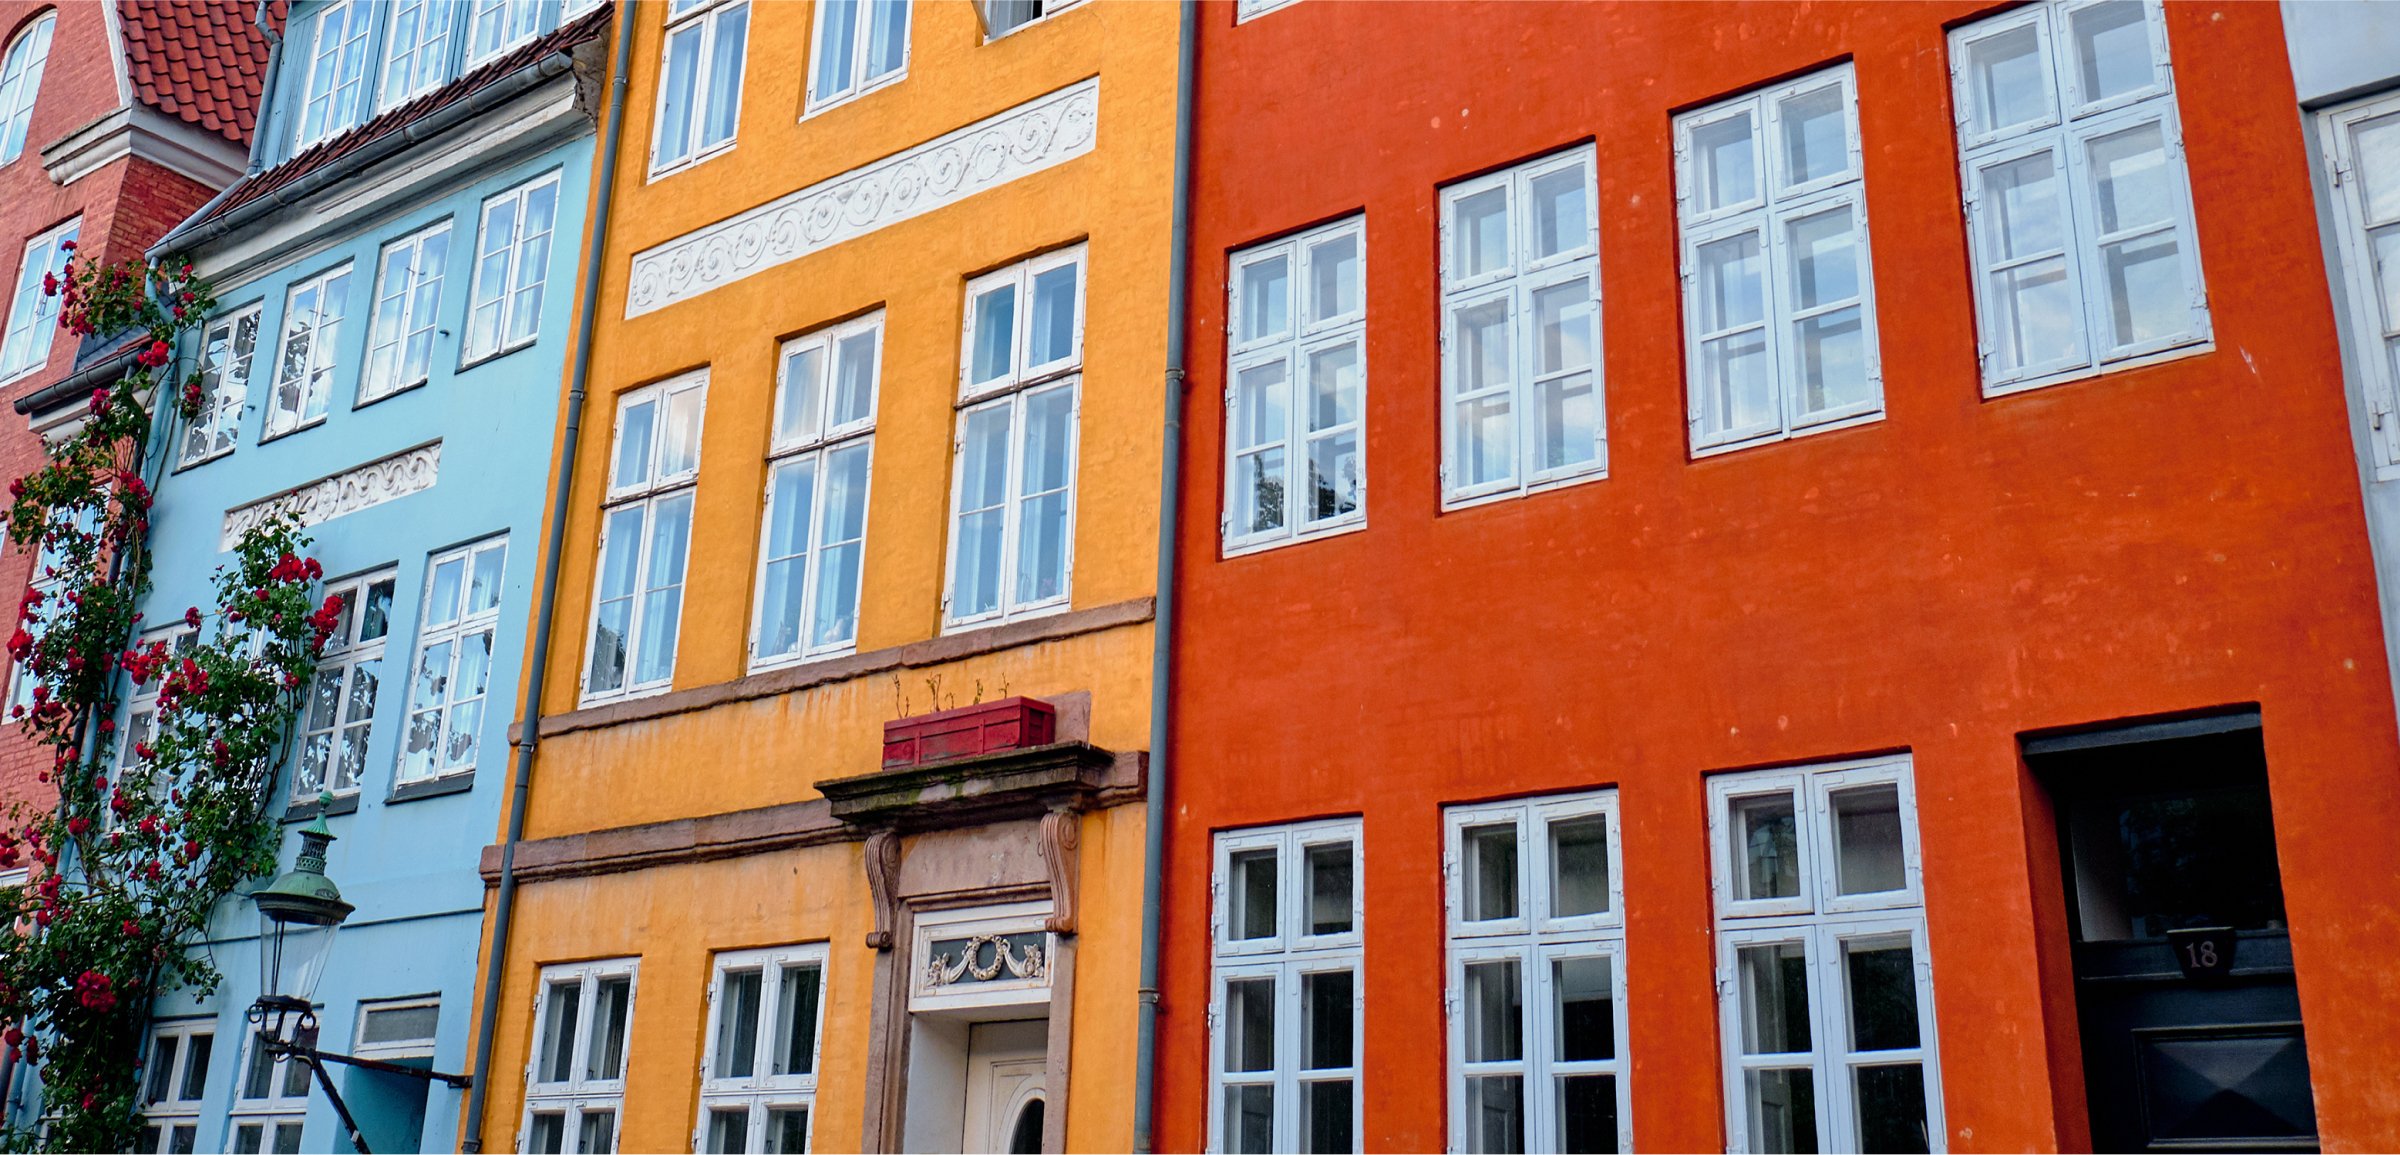 Vibrant buildings in Copenhagen, Denmark, showcasing a beautiful array of colors in the cityscape